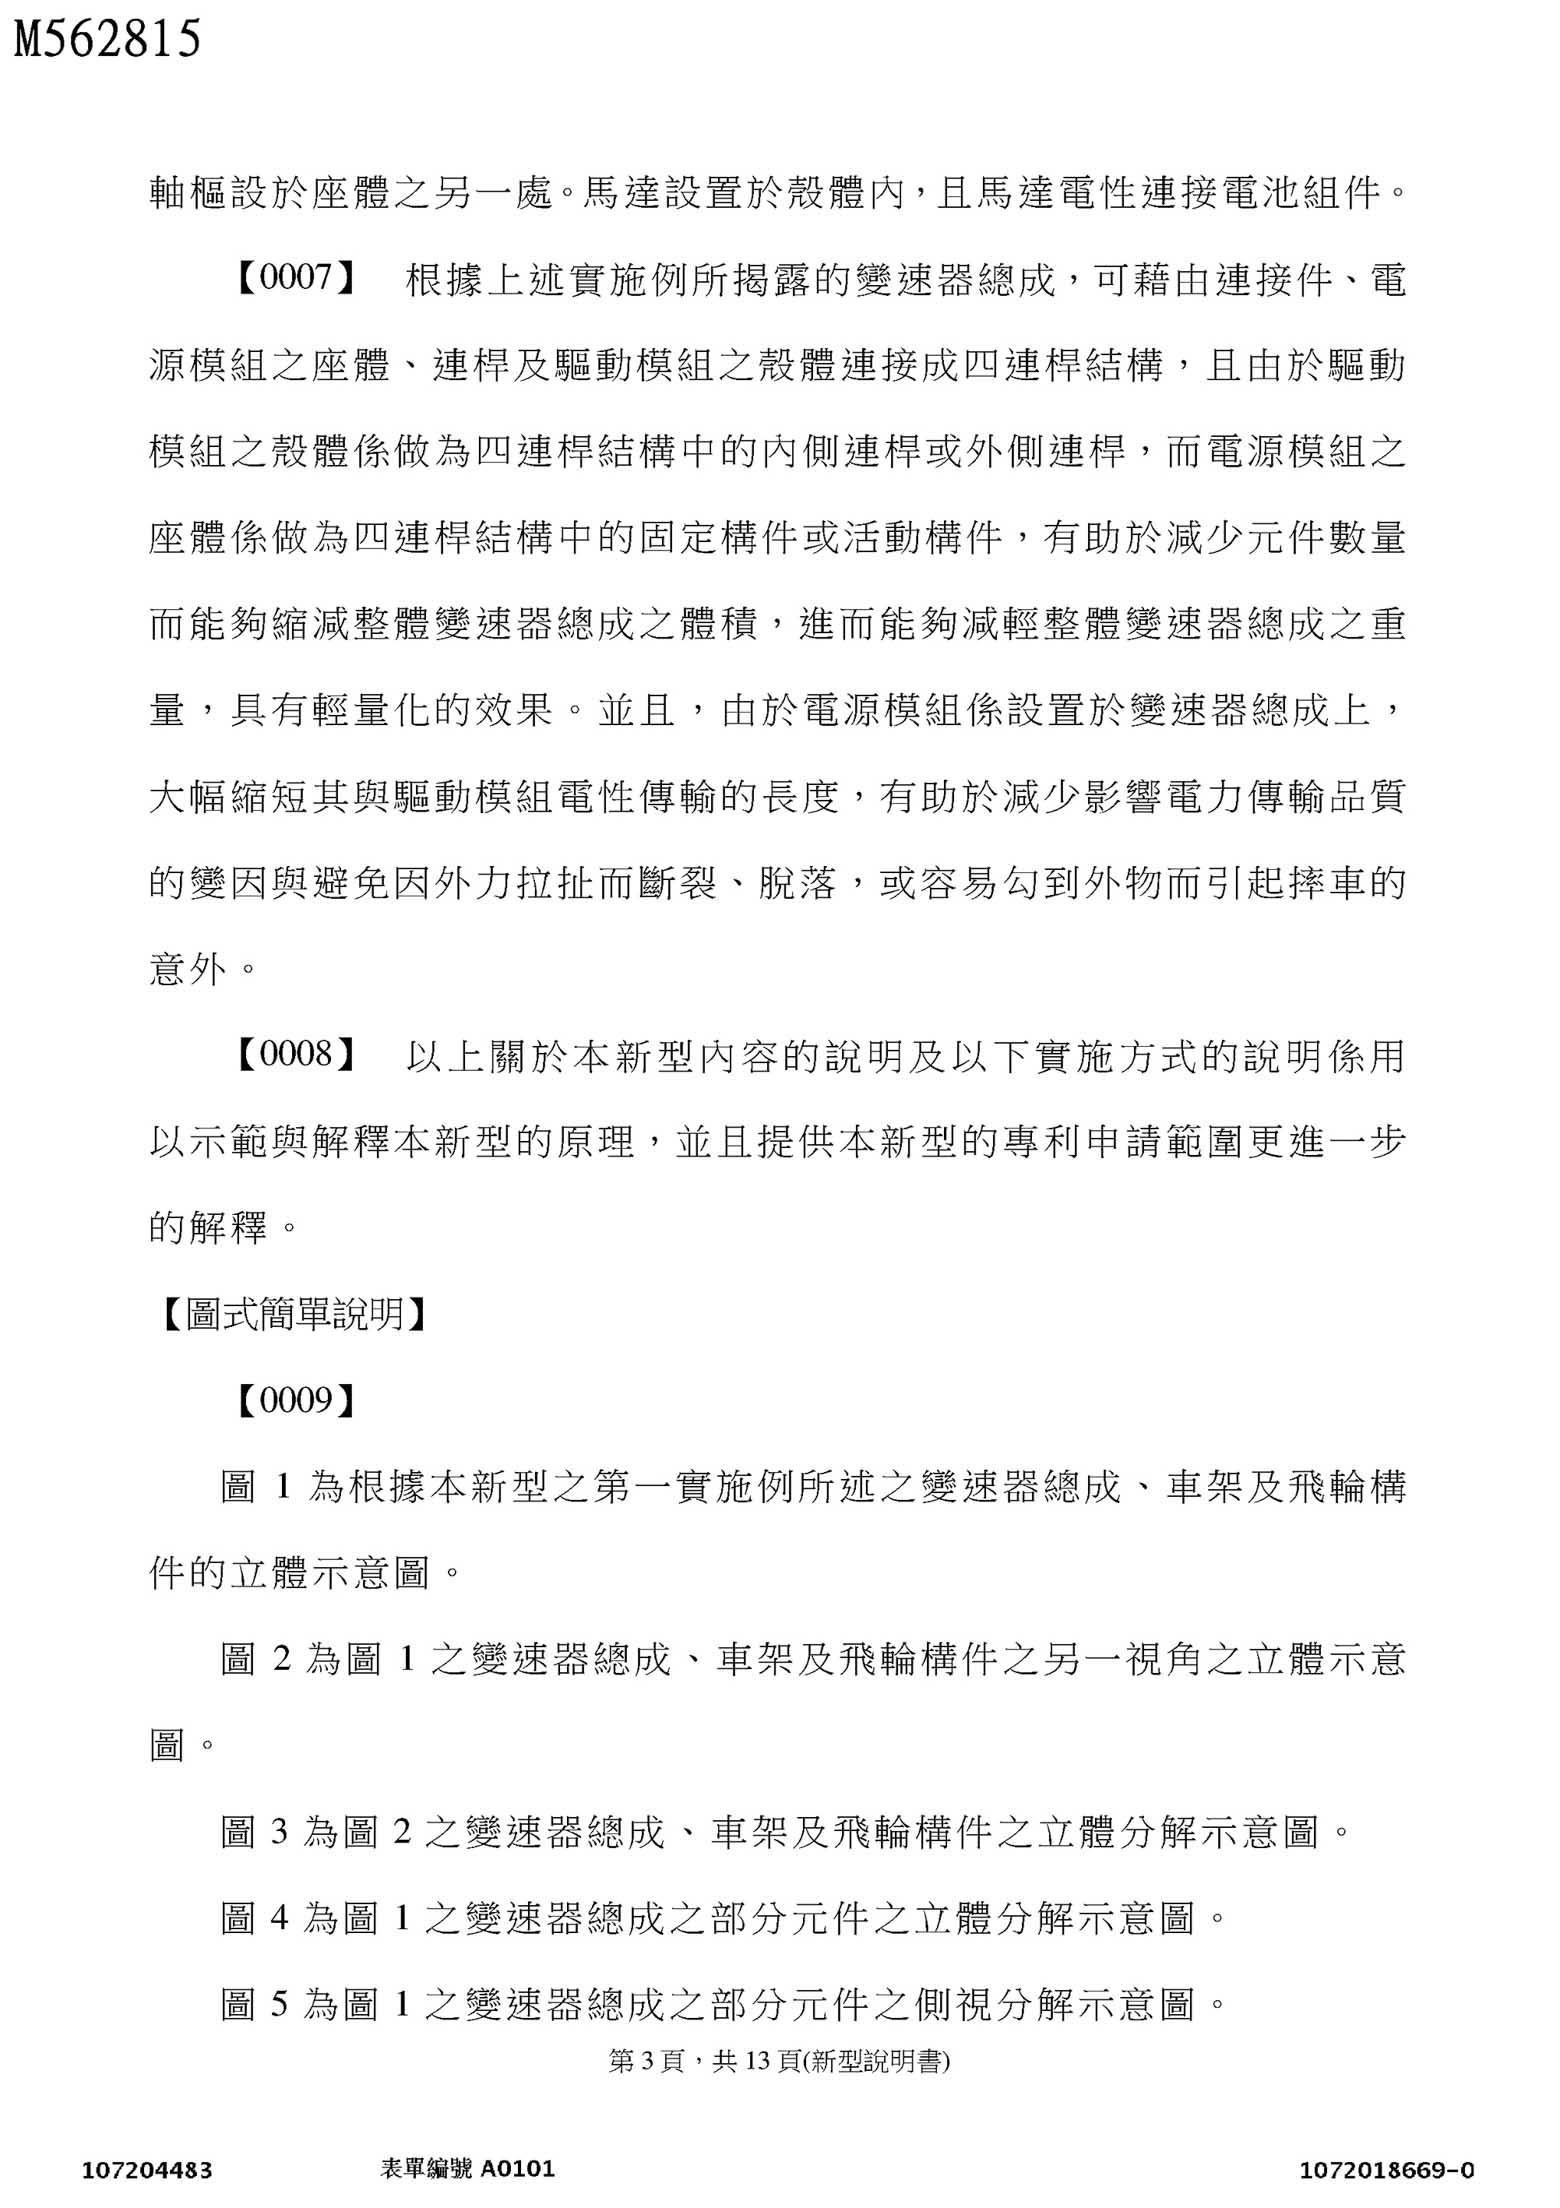 Taiwanese Patent M562815 - Tektro and/or TRP scan 05 main image